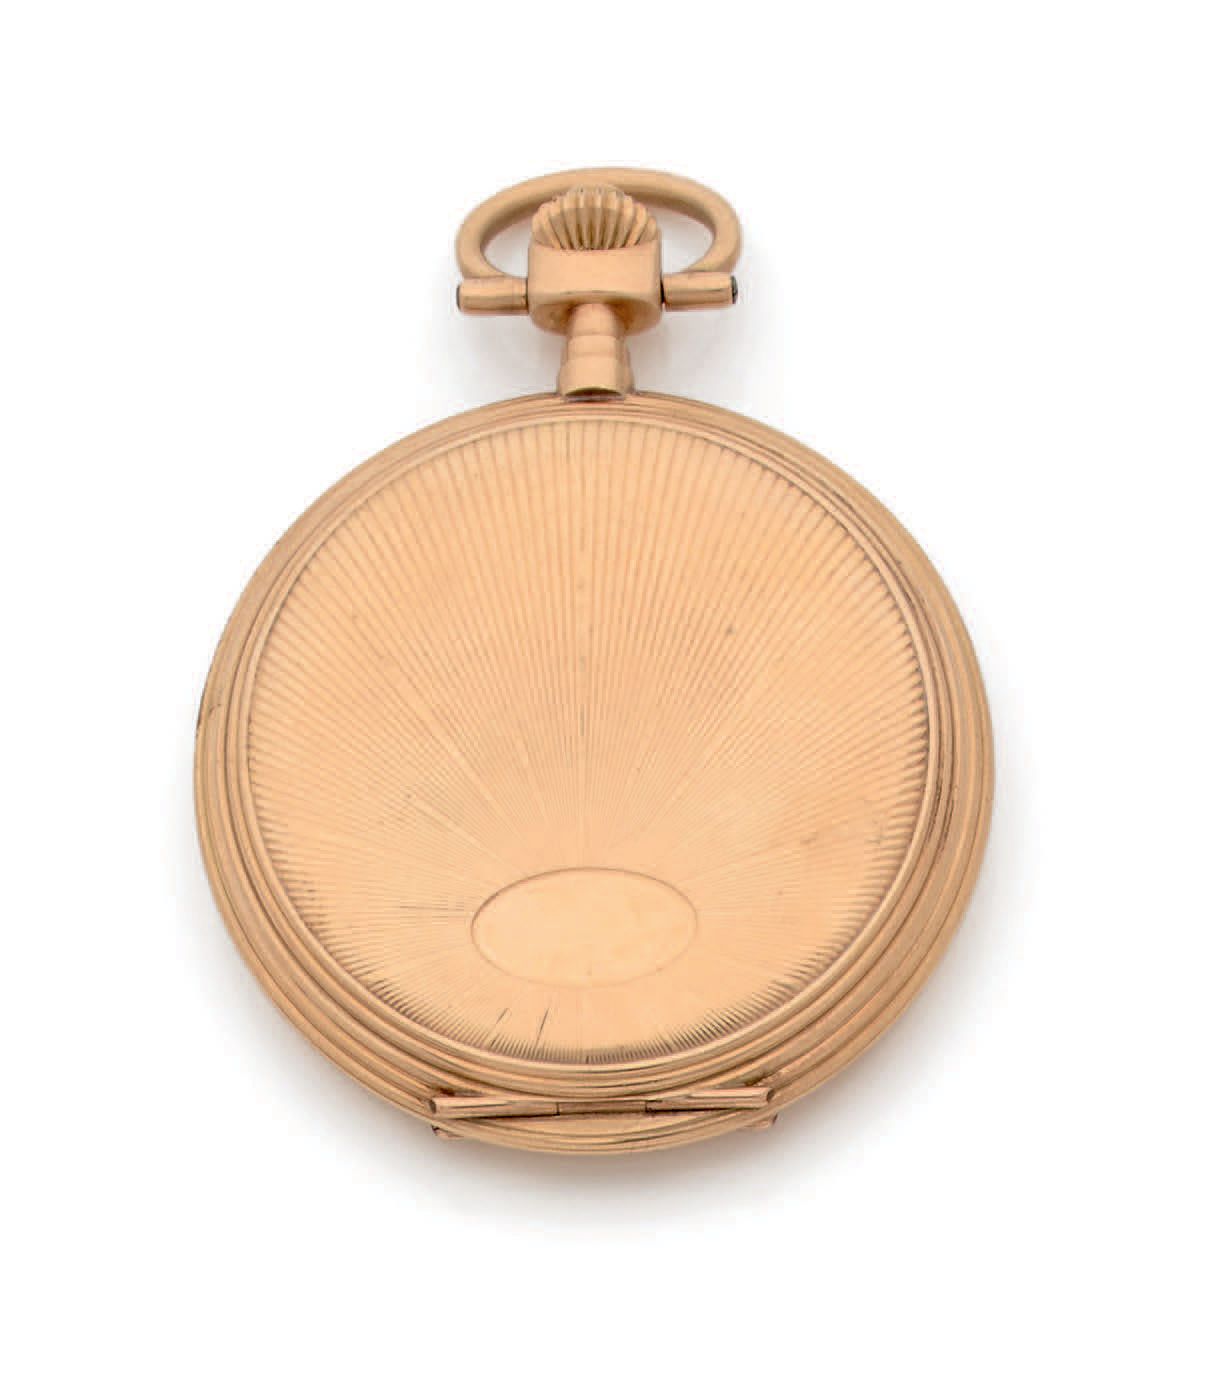 PACEMAKER VERS 1920 
No. 602
14k (585) pink gold savonnette-type pocket watch, p&hellip;